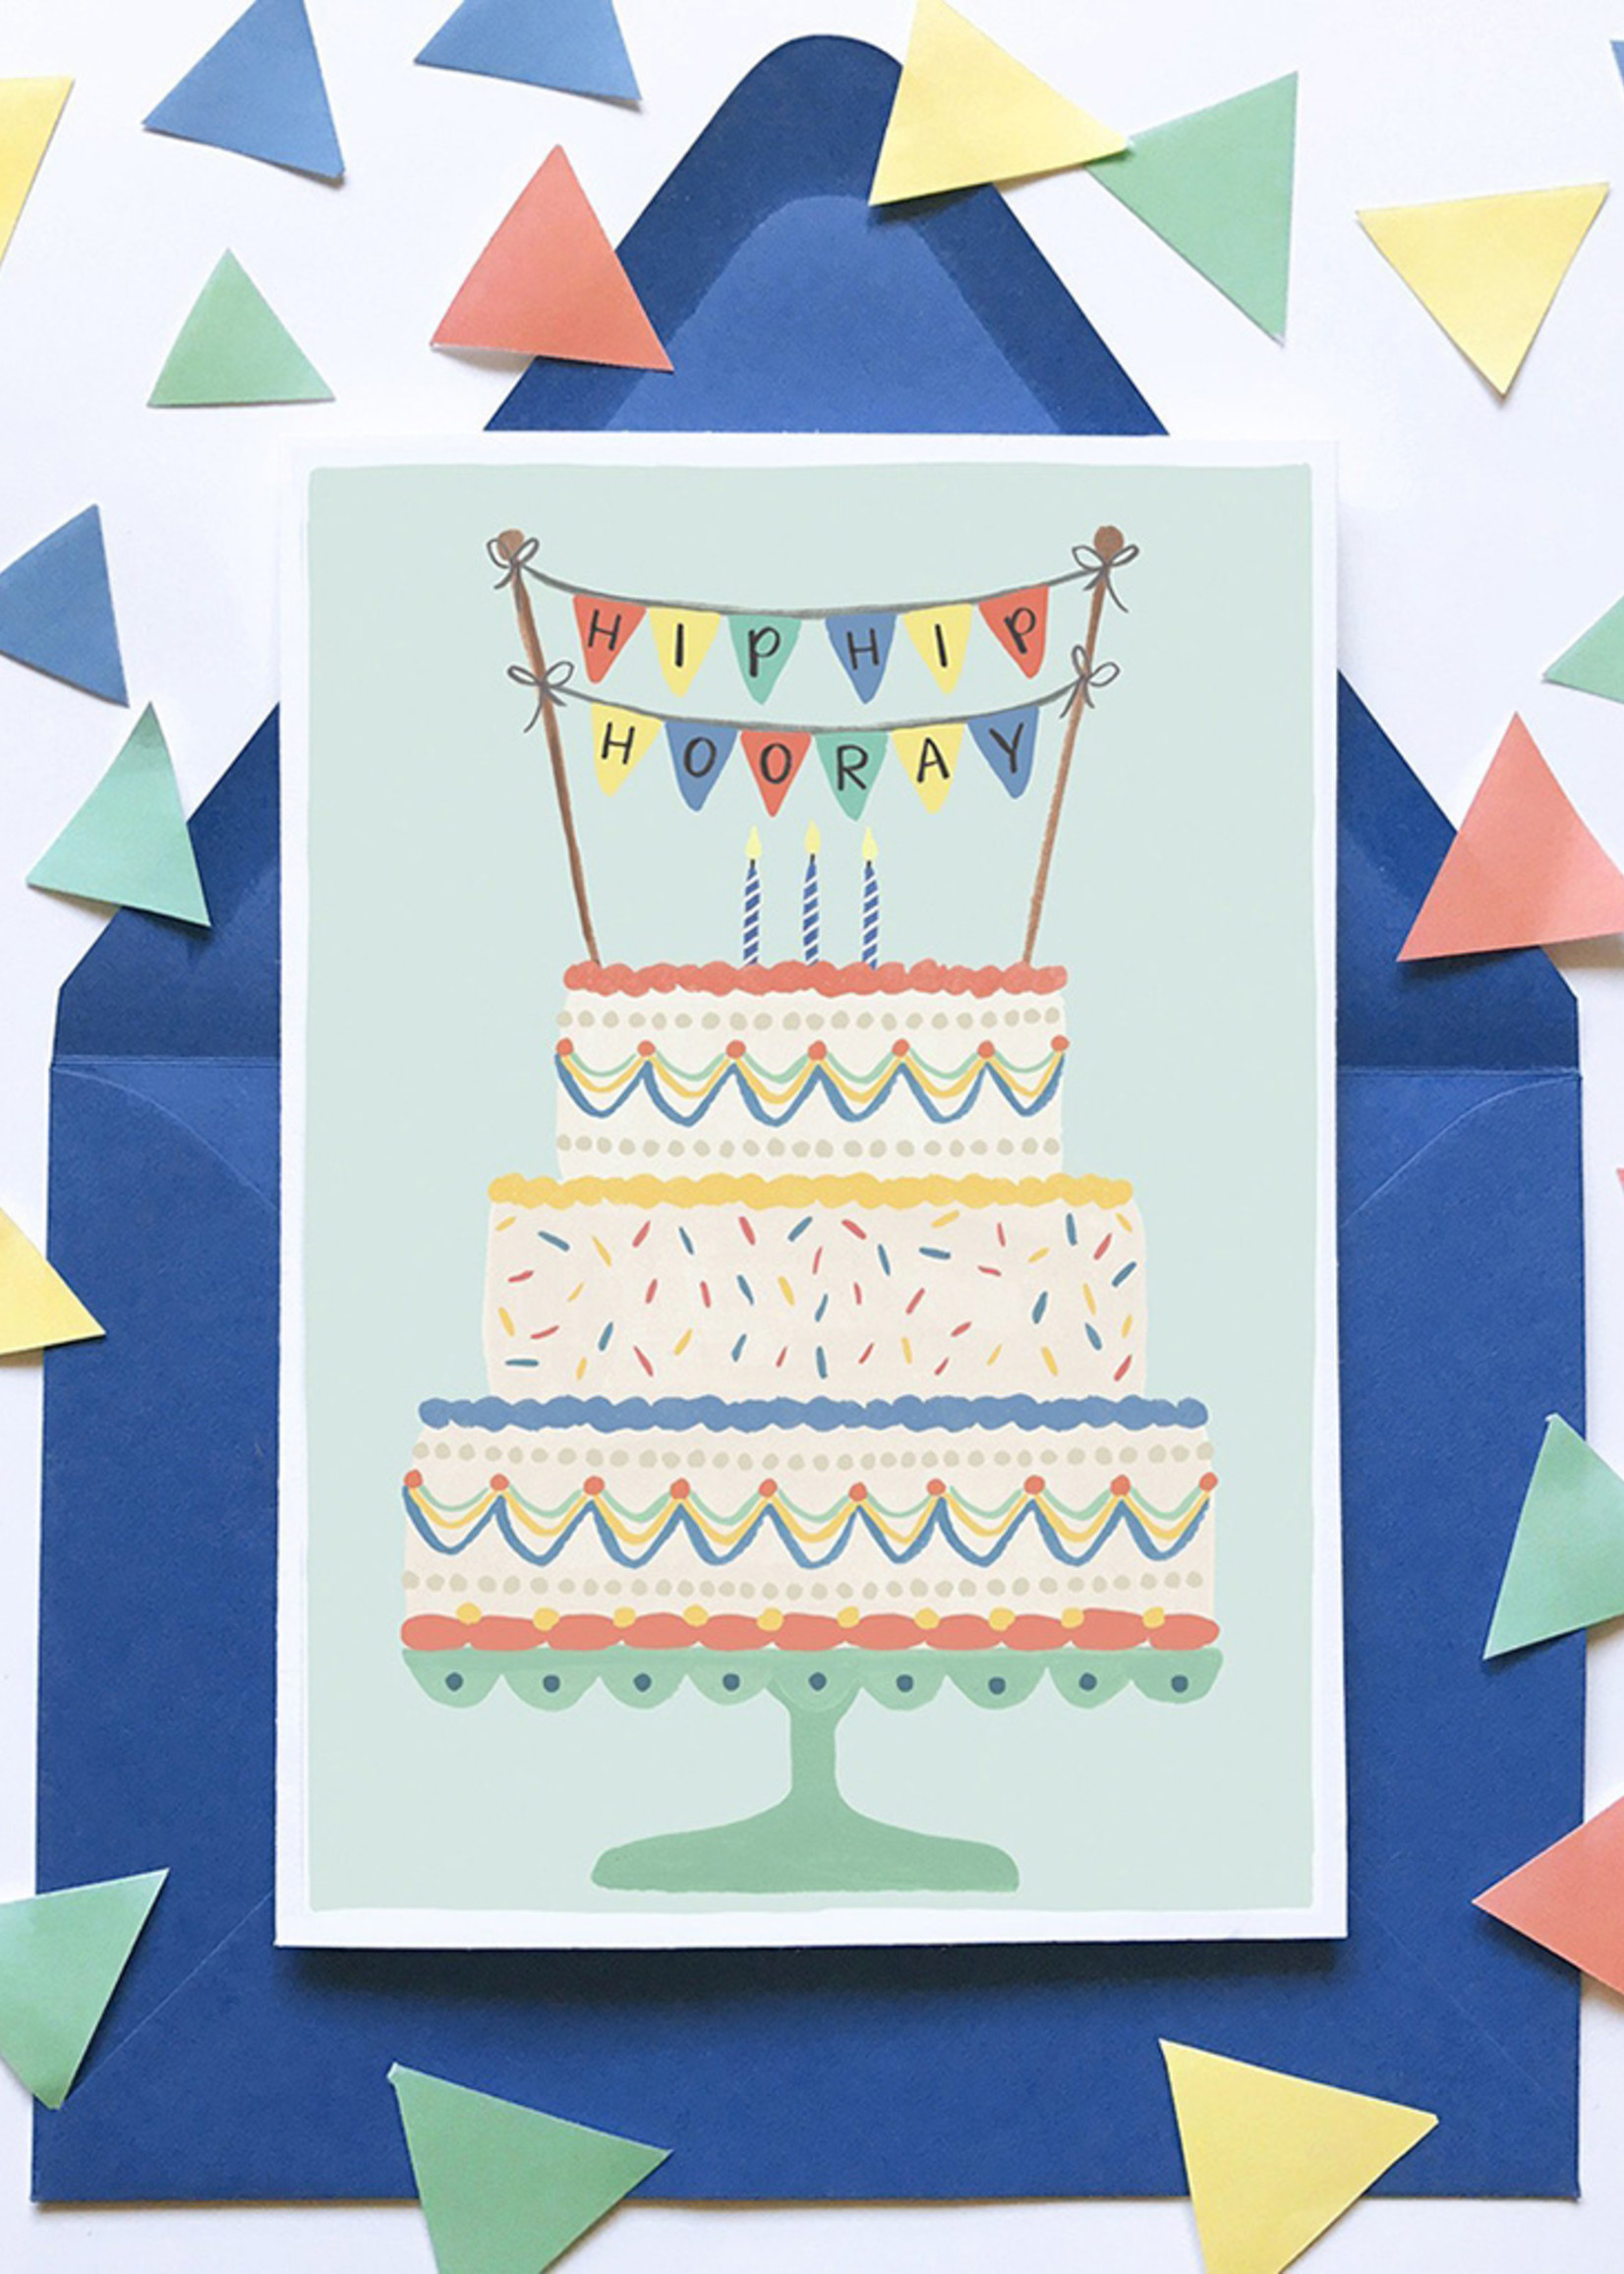 Hip Hip Hooray Cake Birthday Card